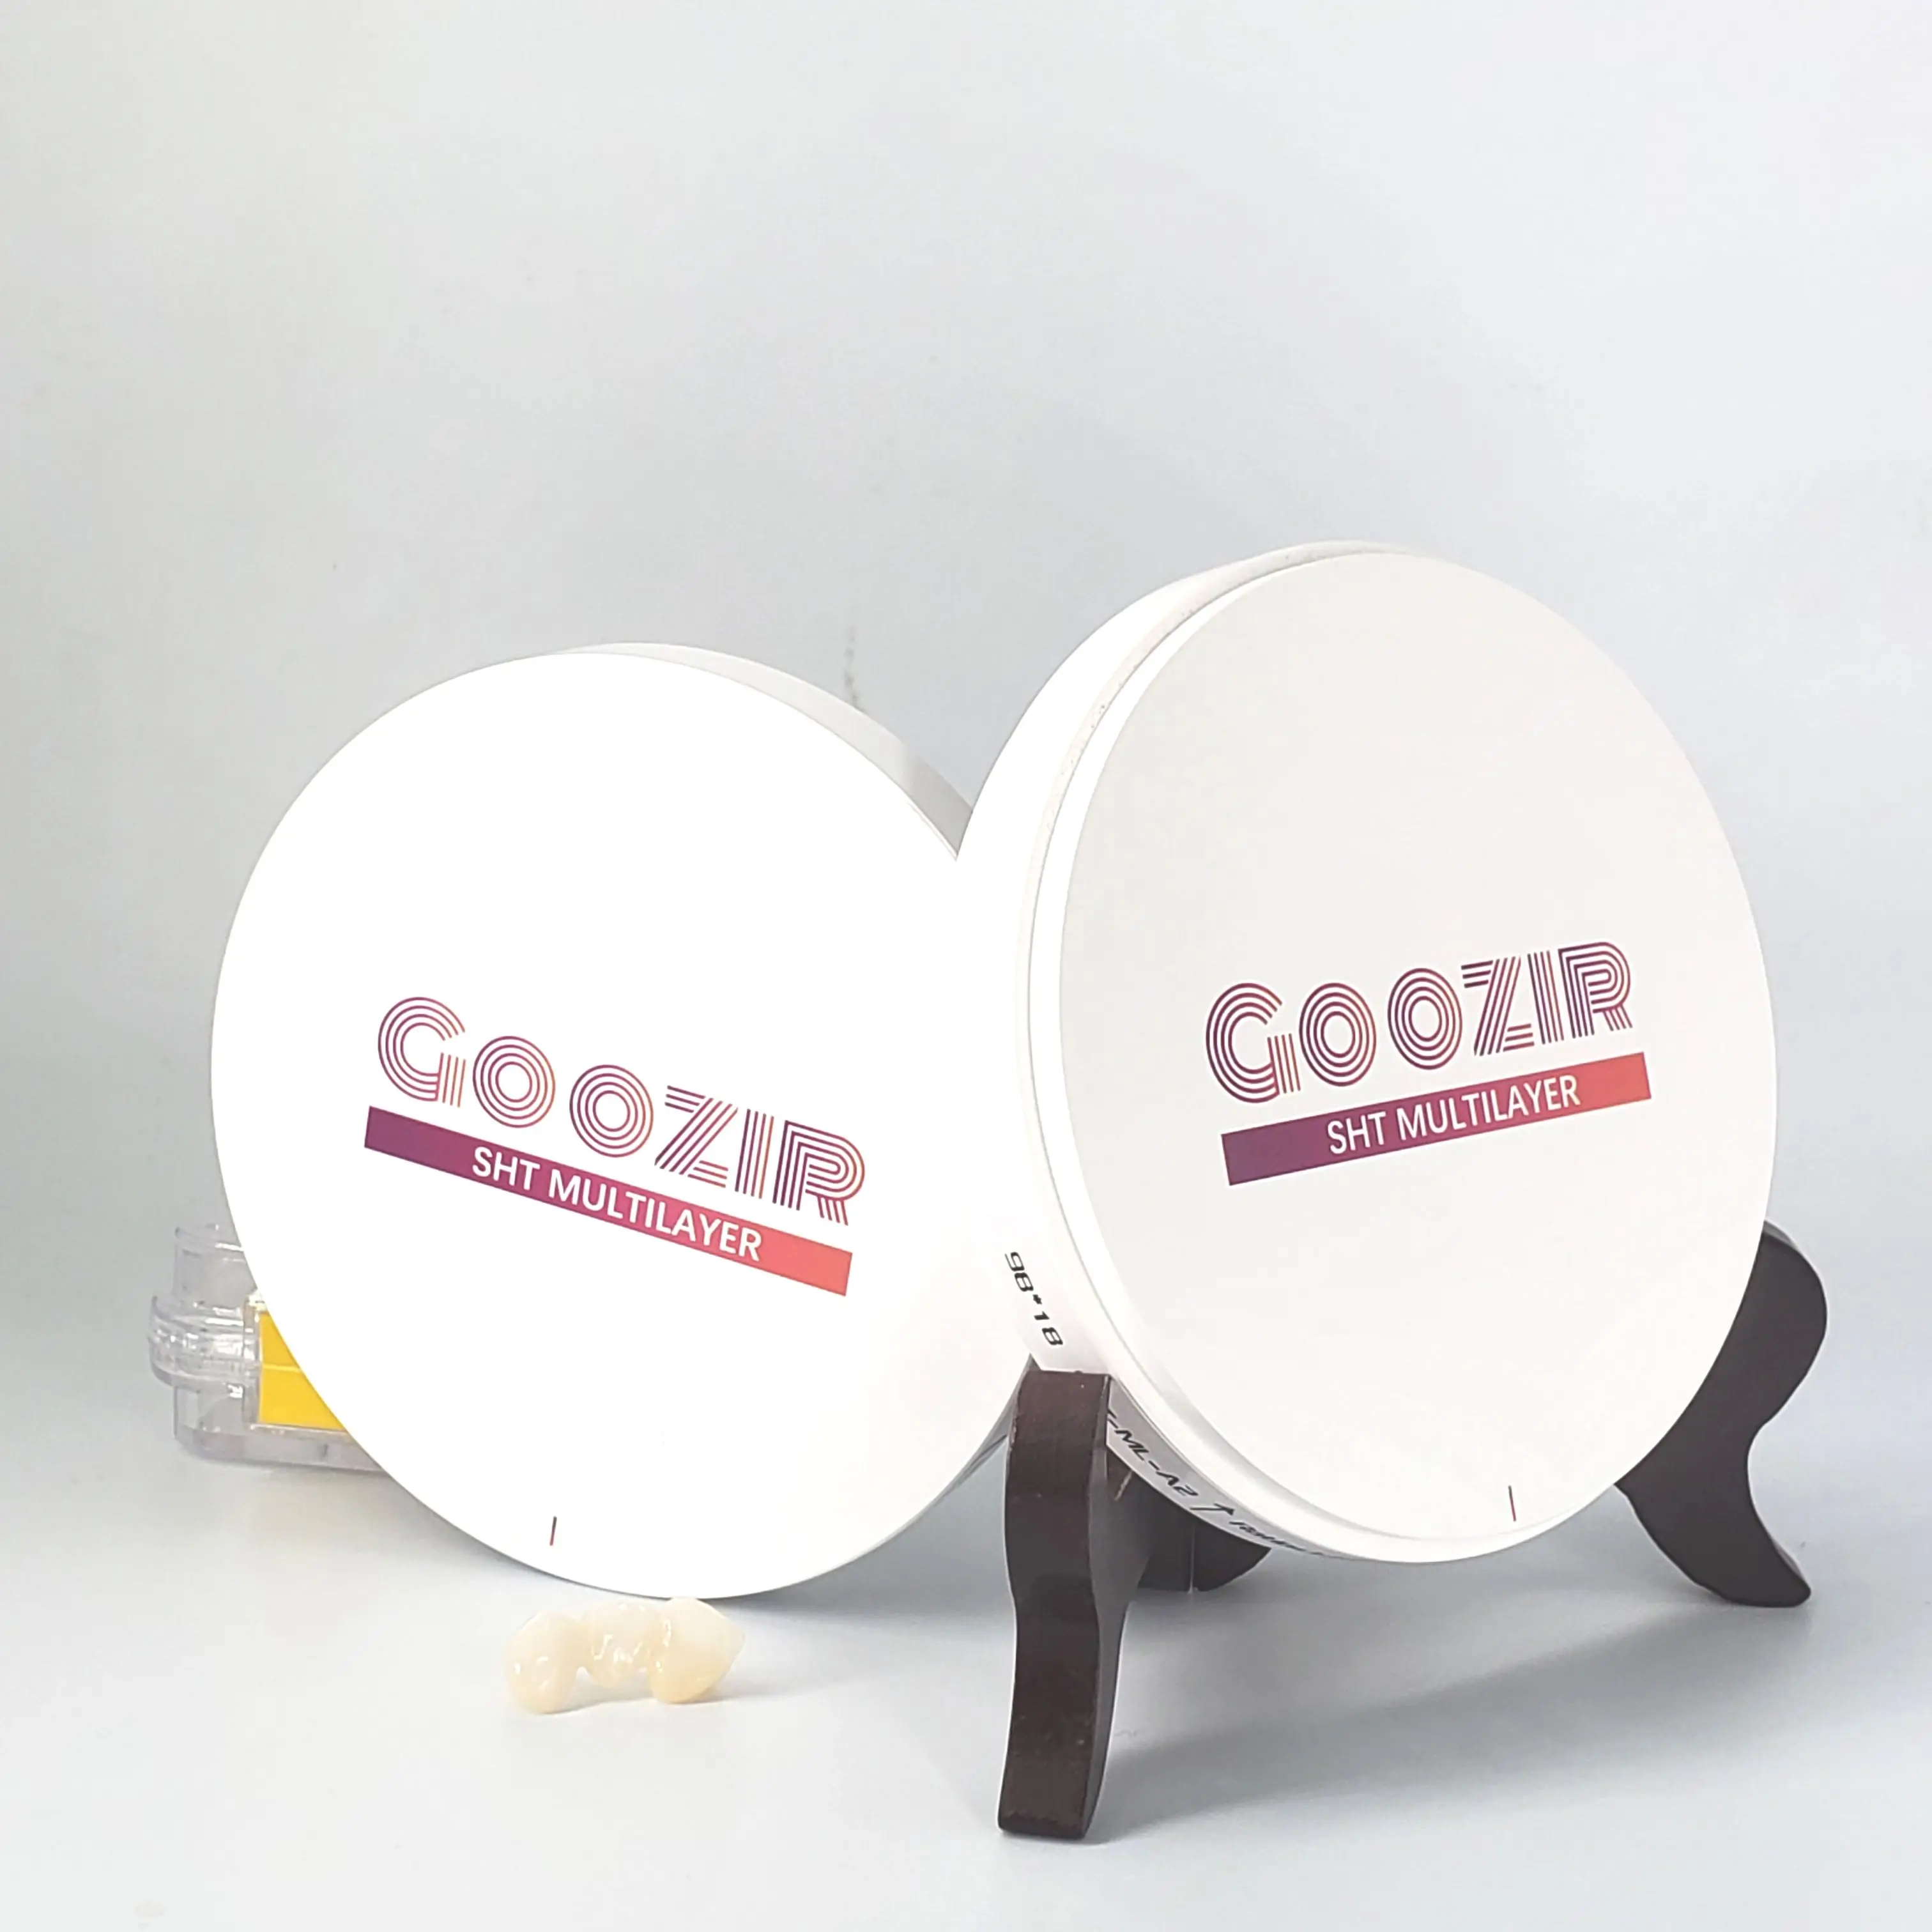 goozir-98mm-b1-sht-fabricante-de-materiales-dentales-bloque-de-zirconia-dental-para-laboratorio-dental